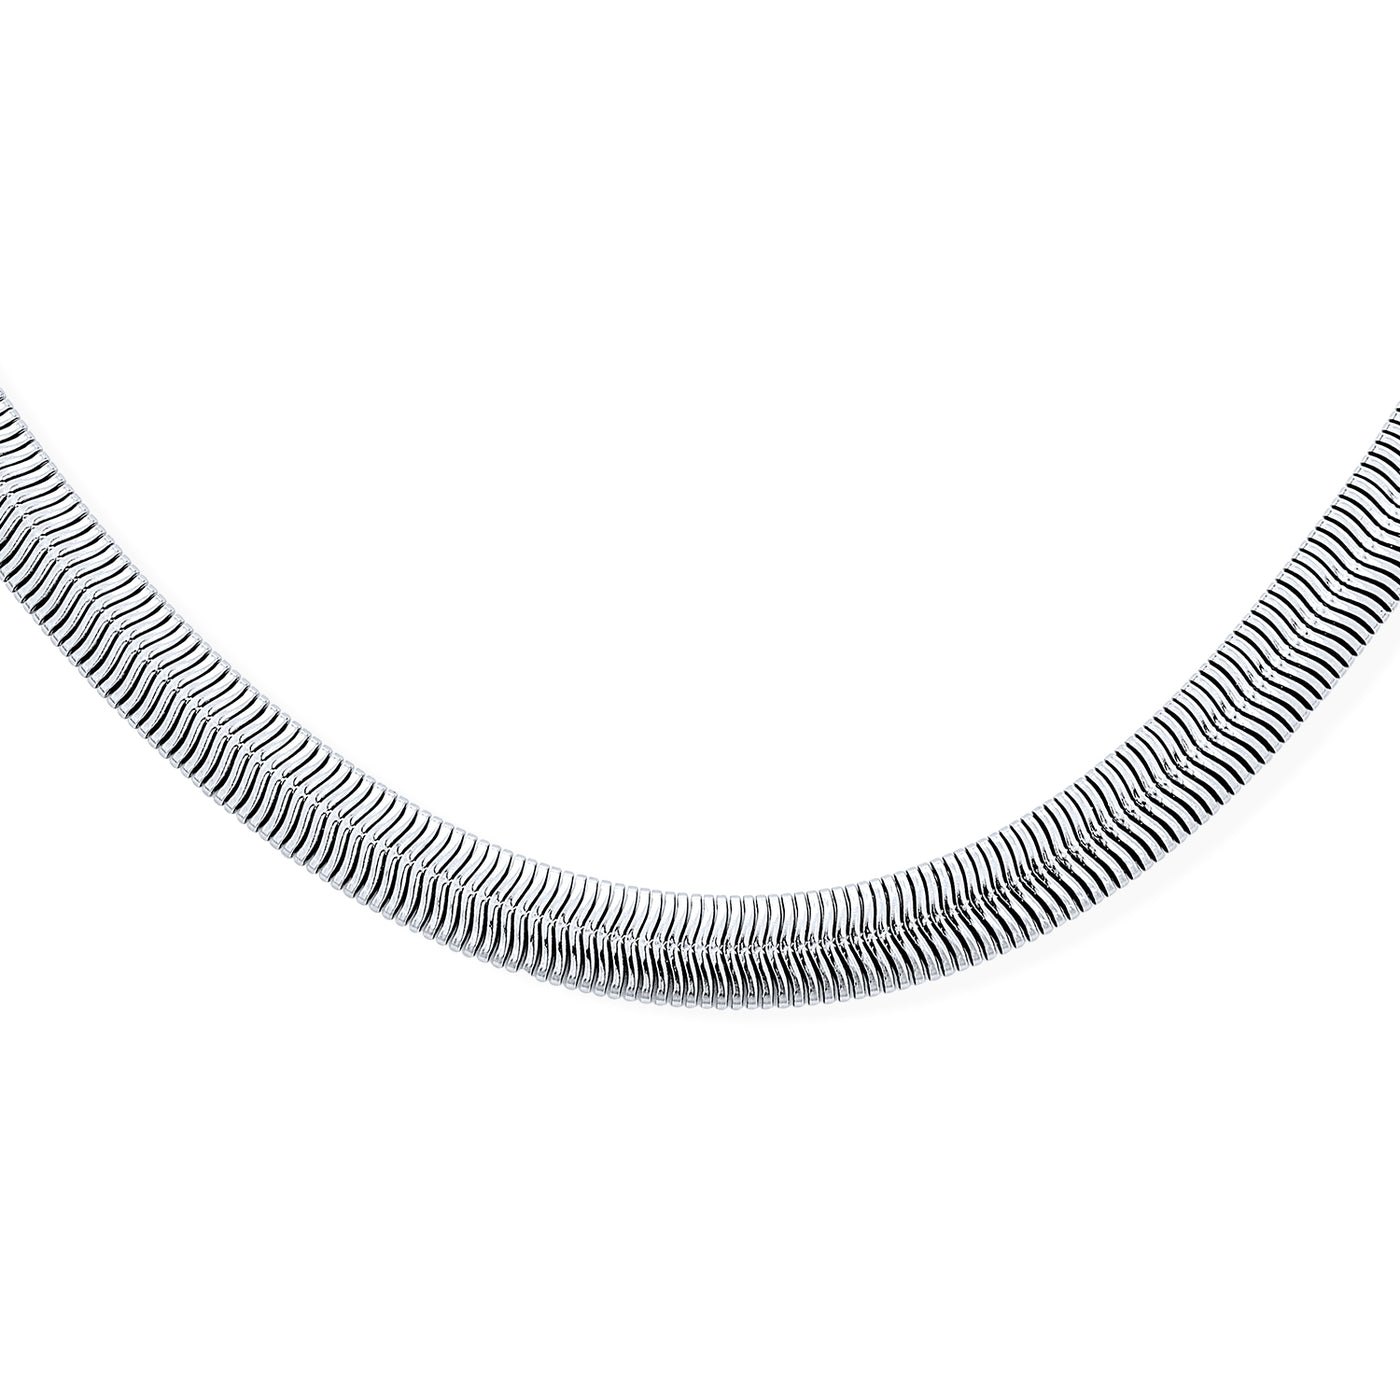 Wide Herringbone Flat Snake Flexible Chain Necklace Stainless Steel